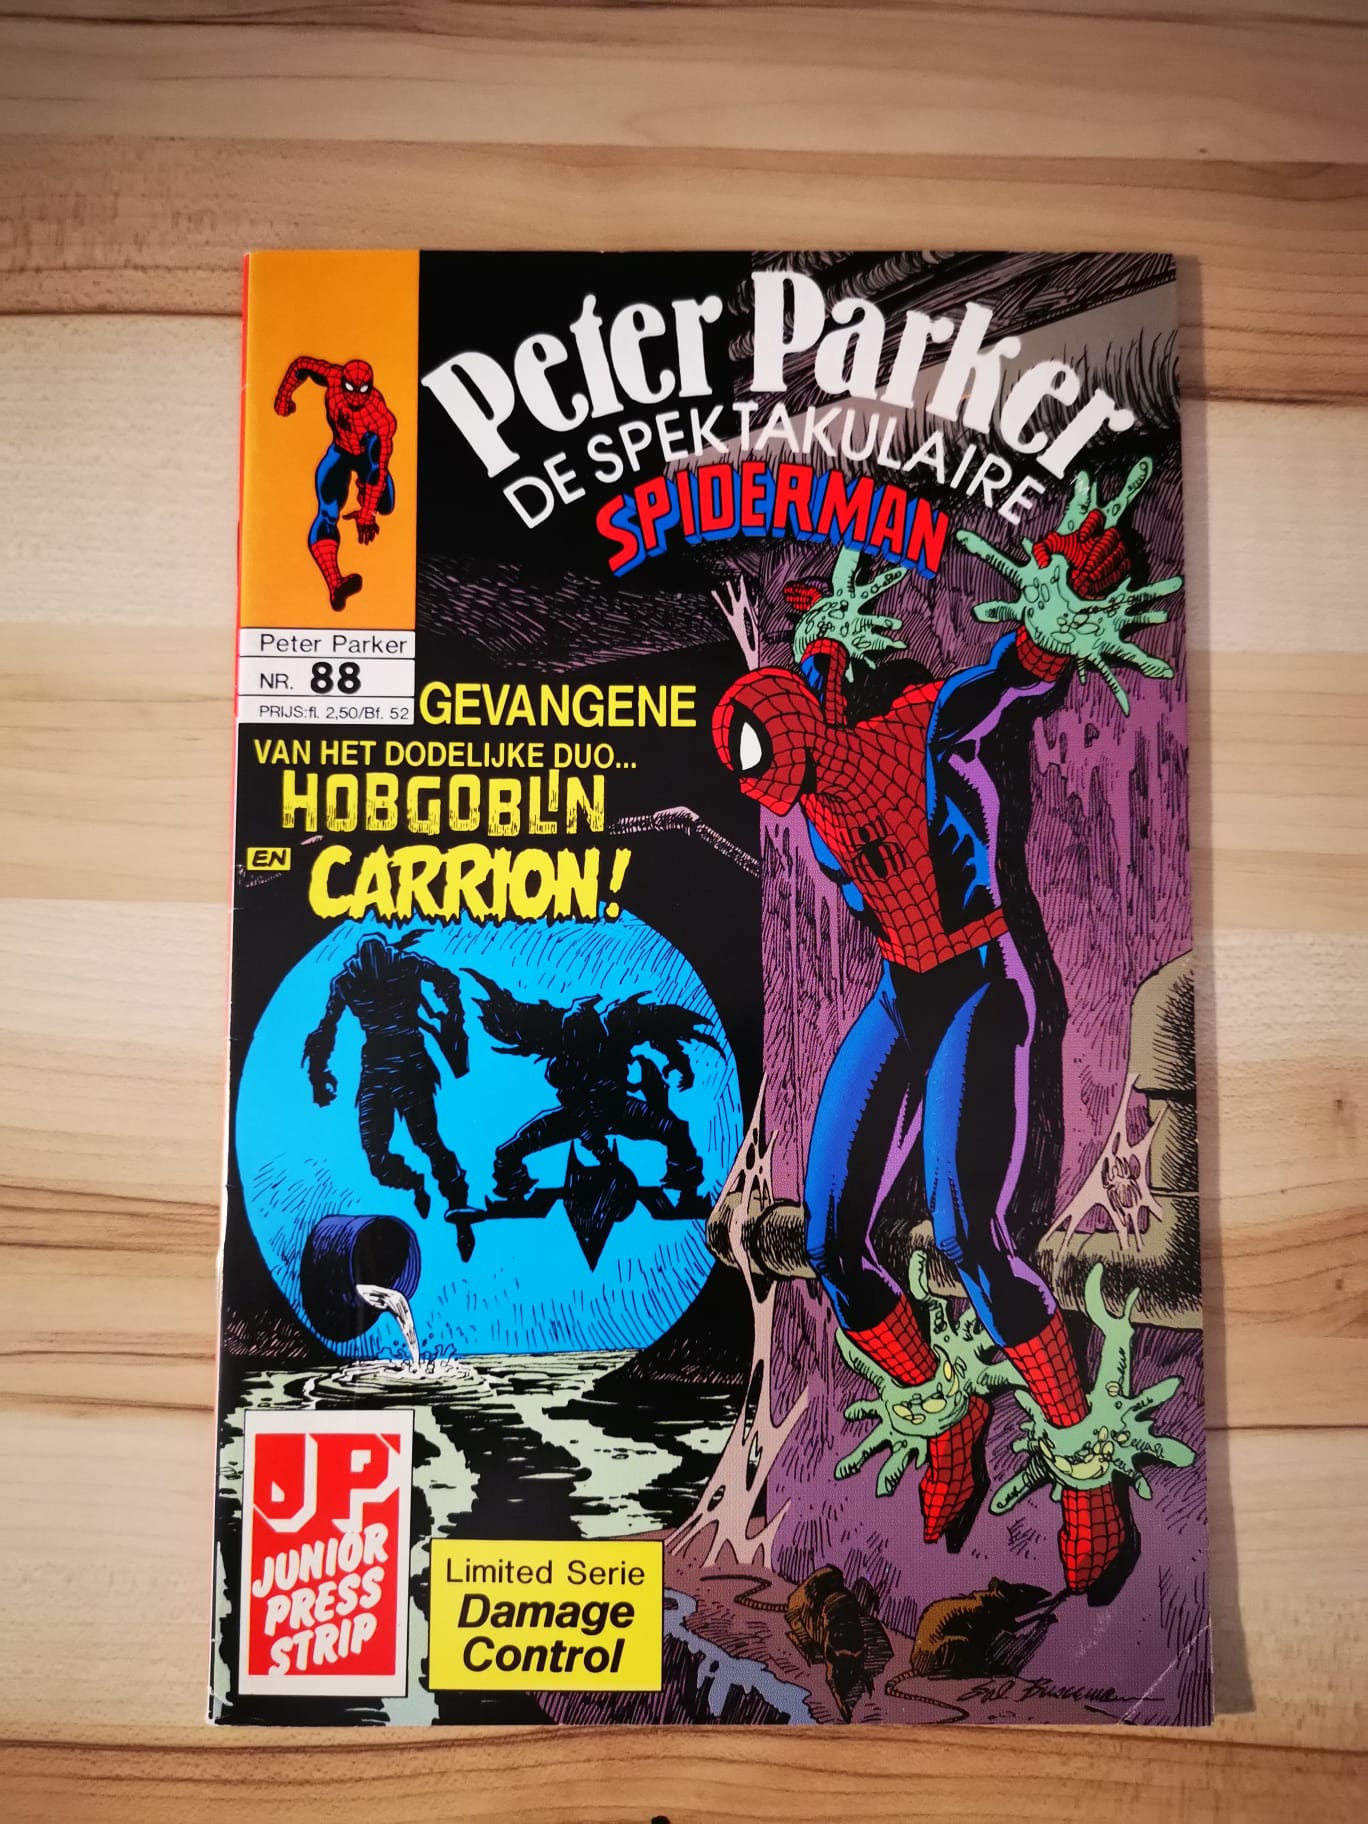 Peter Parker De spektakulaire spiderman #88